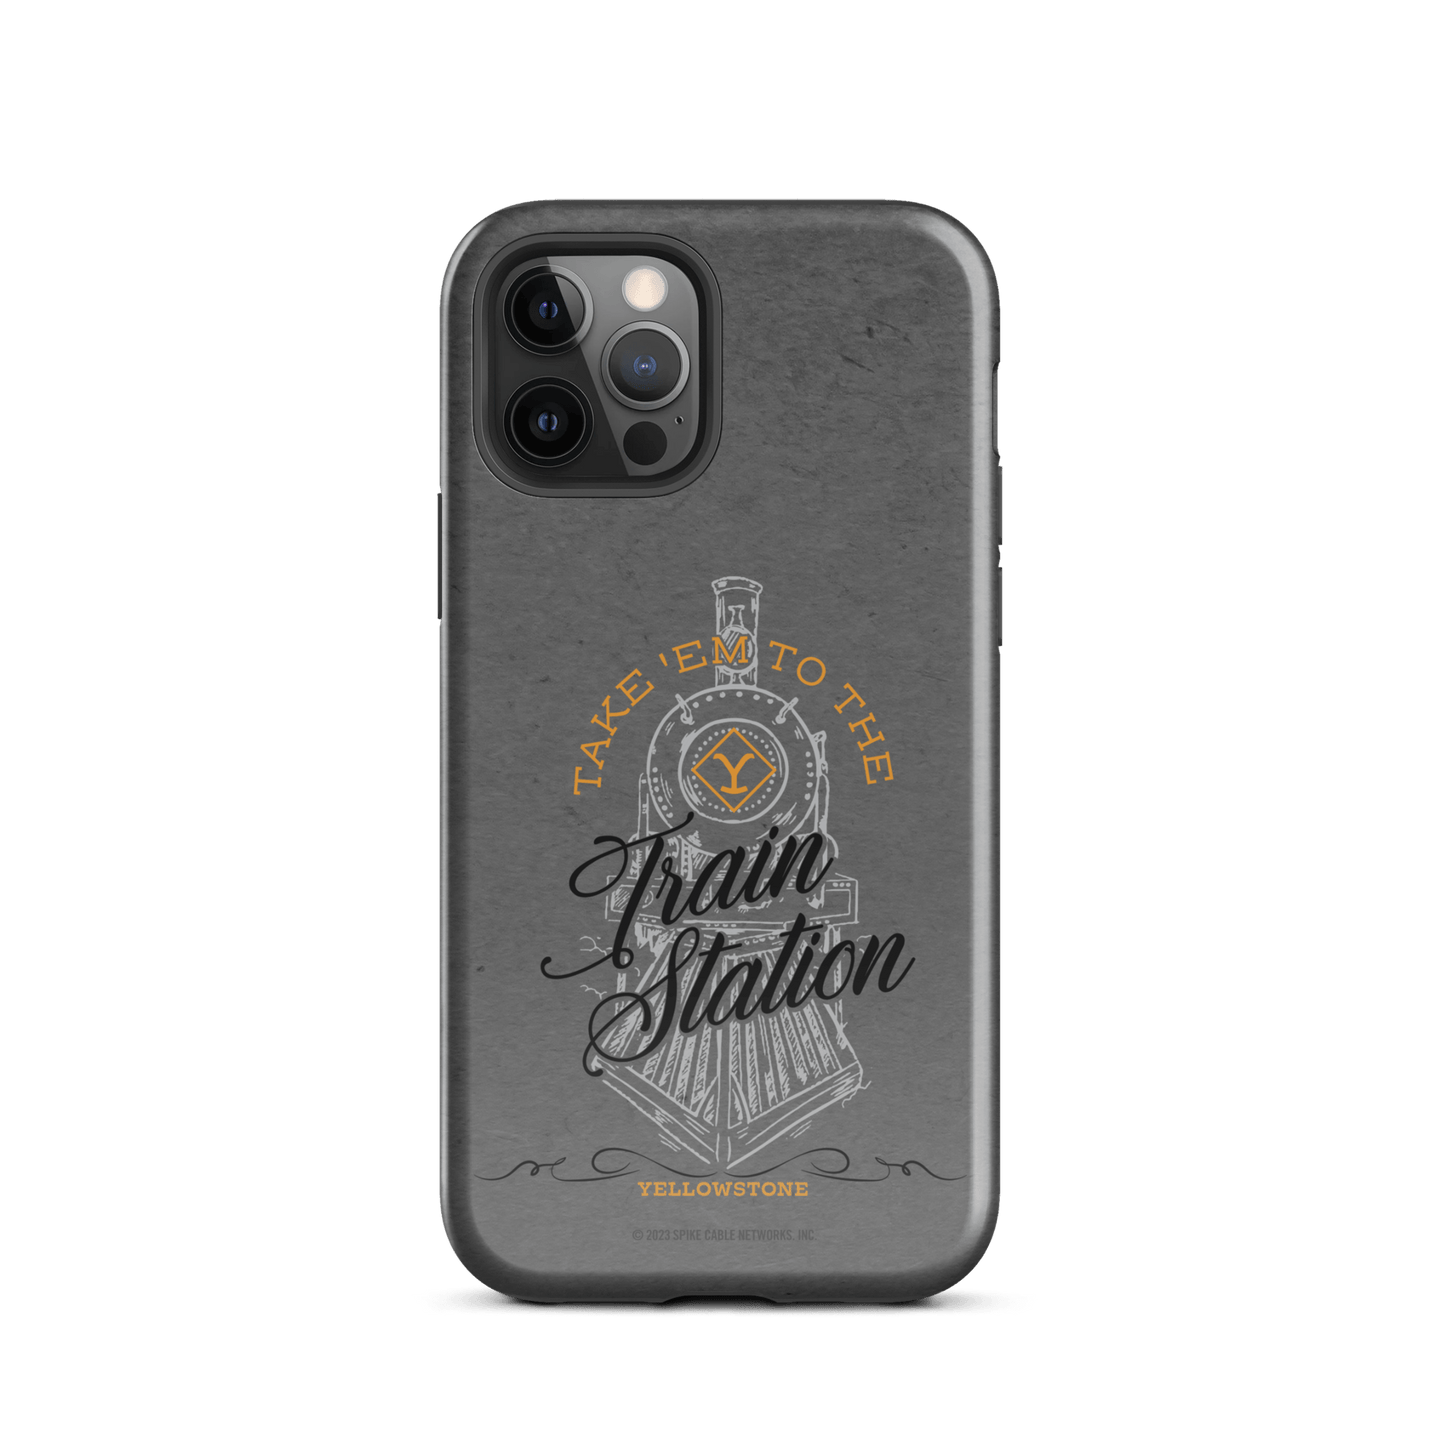 Yellowstone Train Station Tough Phone Case - iPhone - Paramount Shop